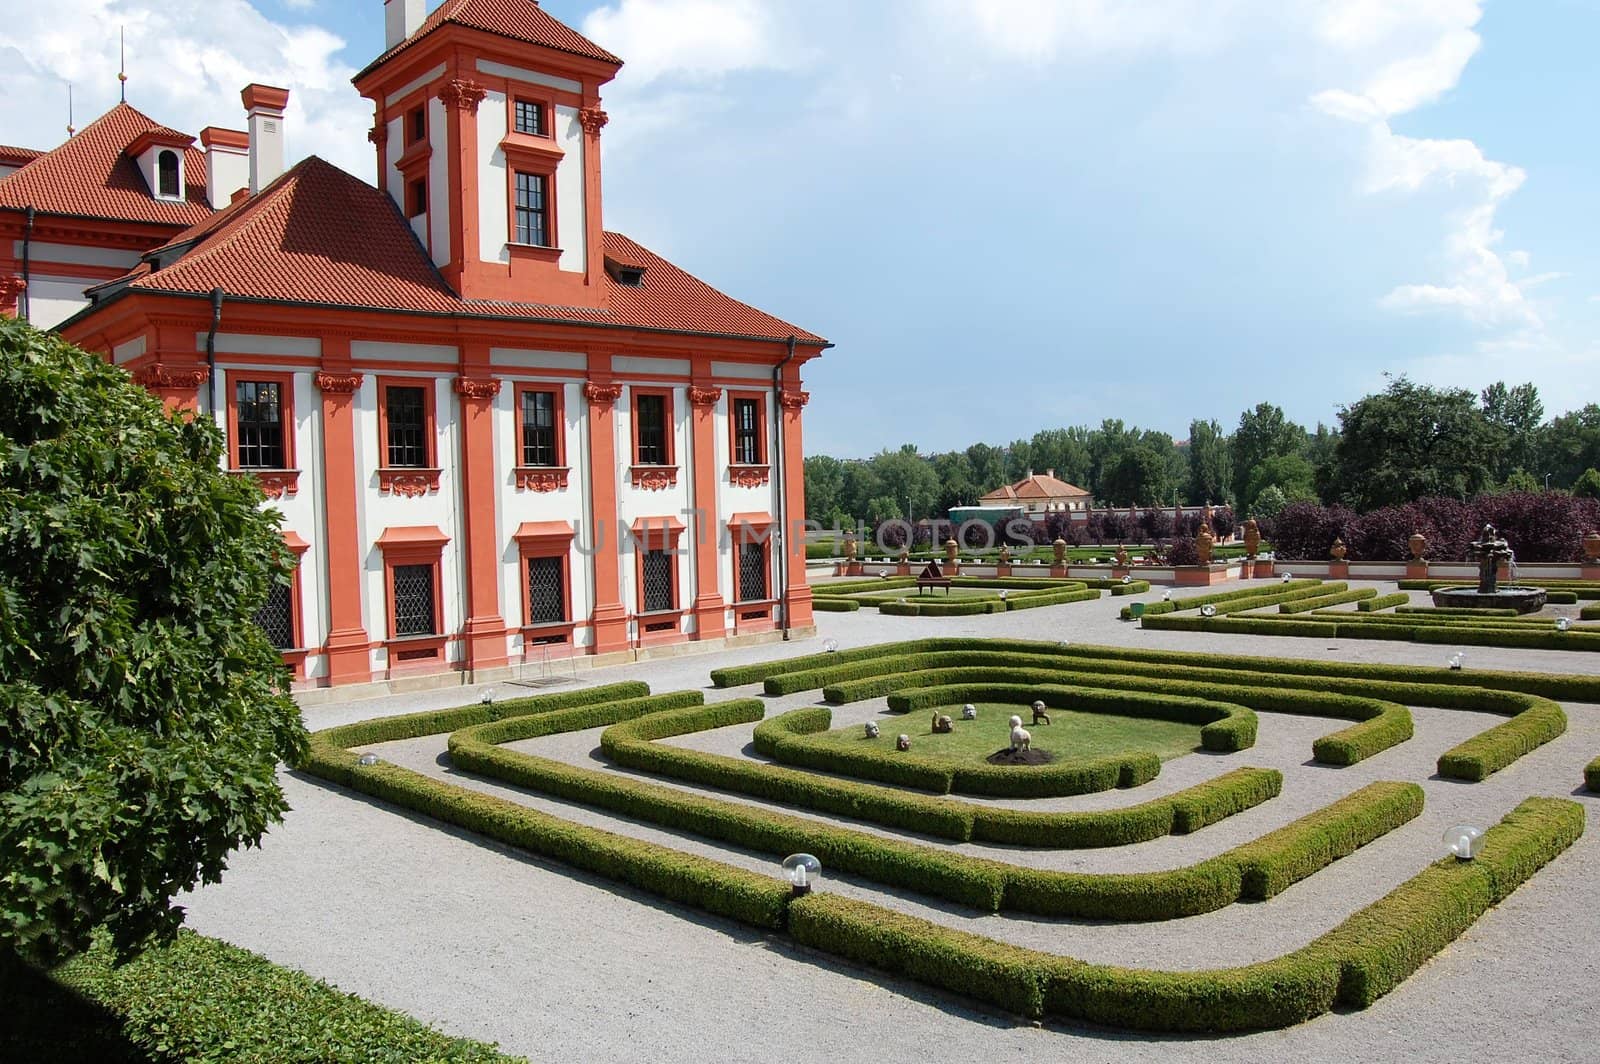 Troja Palace and garden in Prague in Czech Republic